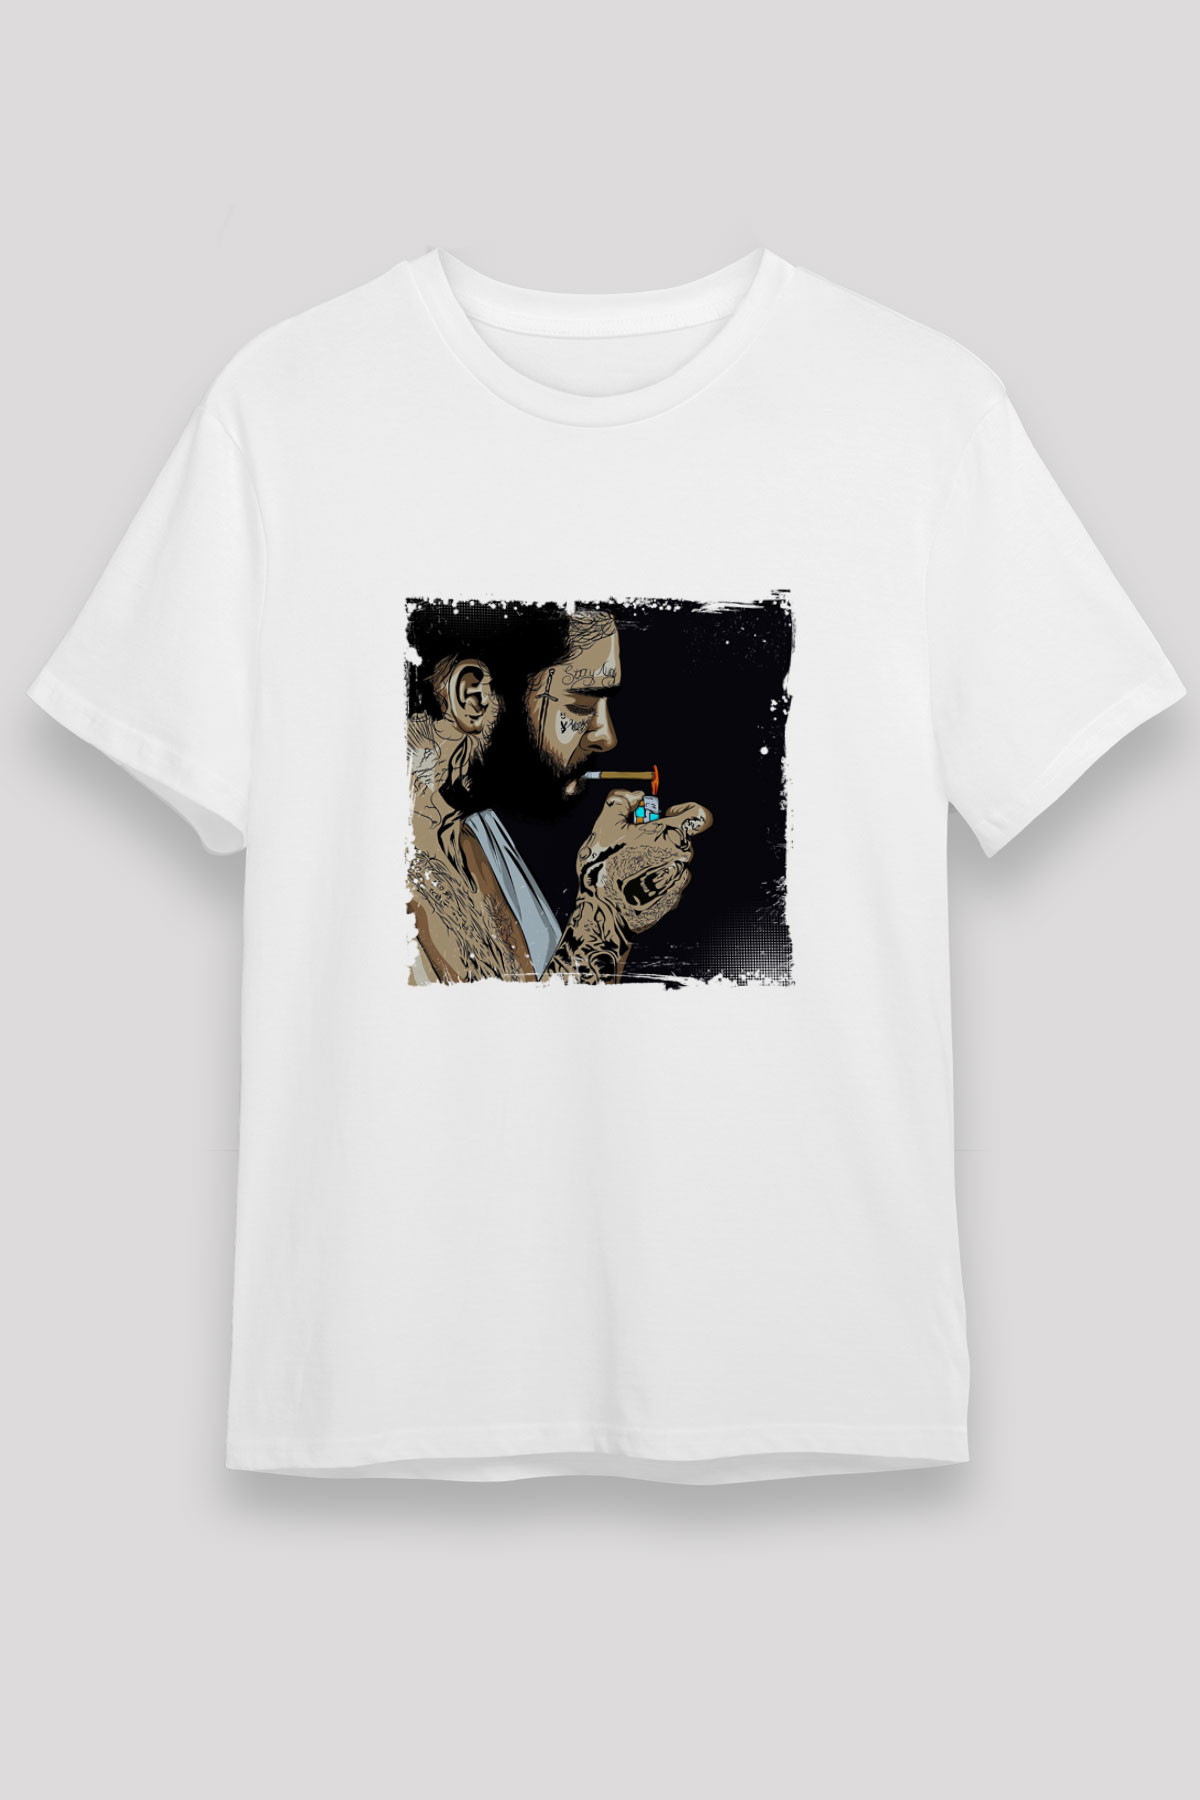 Post Malone T shirt,Hip Hop,Rap Tshirt 08/